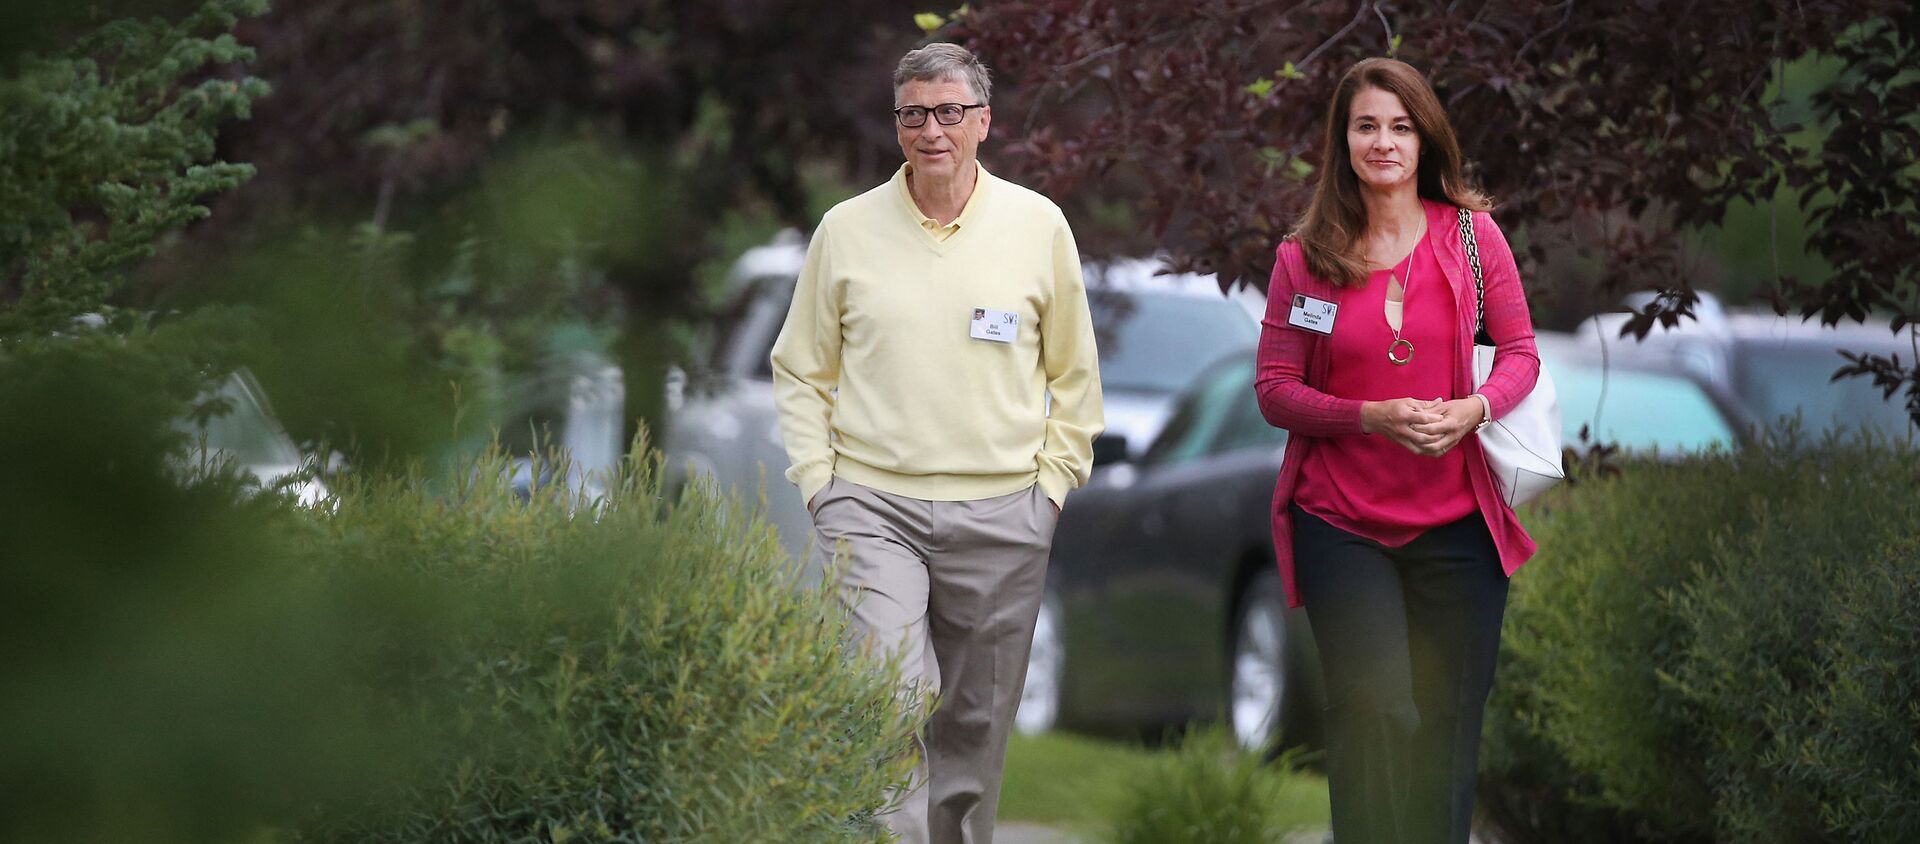 Миллиардер Билл Гейтс и его жена Мелинда Гейтс. Архивное фото - Sputnik Кыргызстан, 1920, 06.05.2021